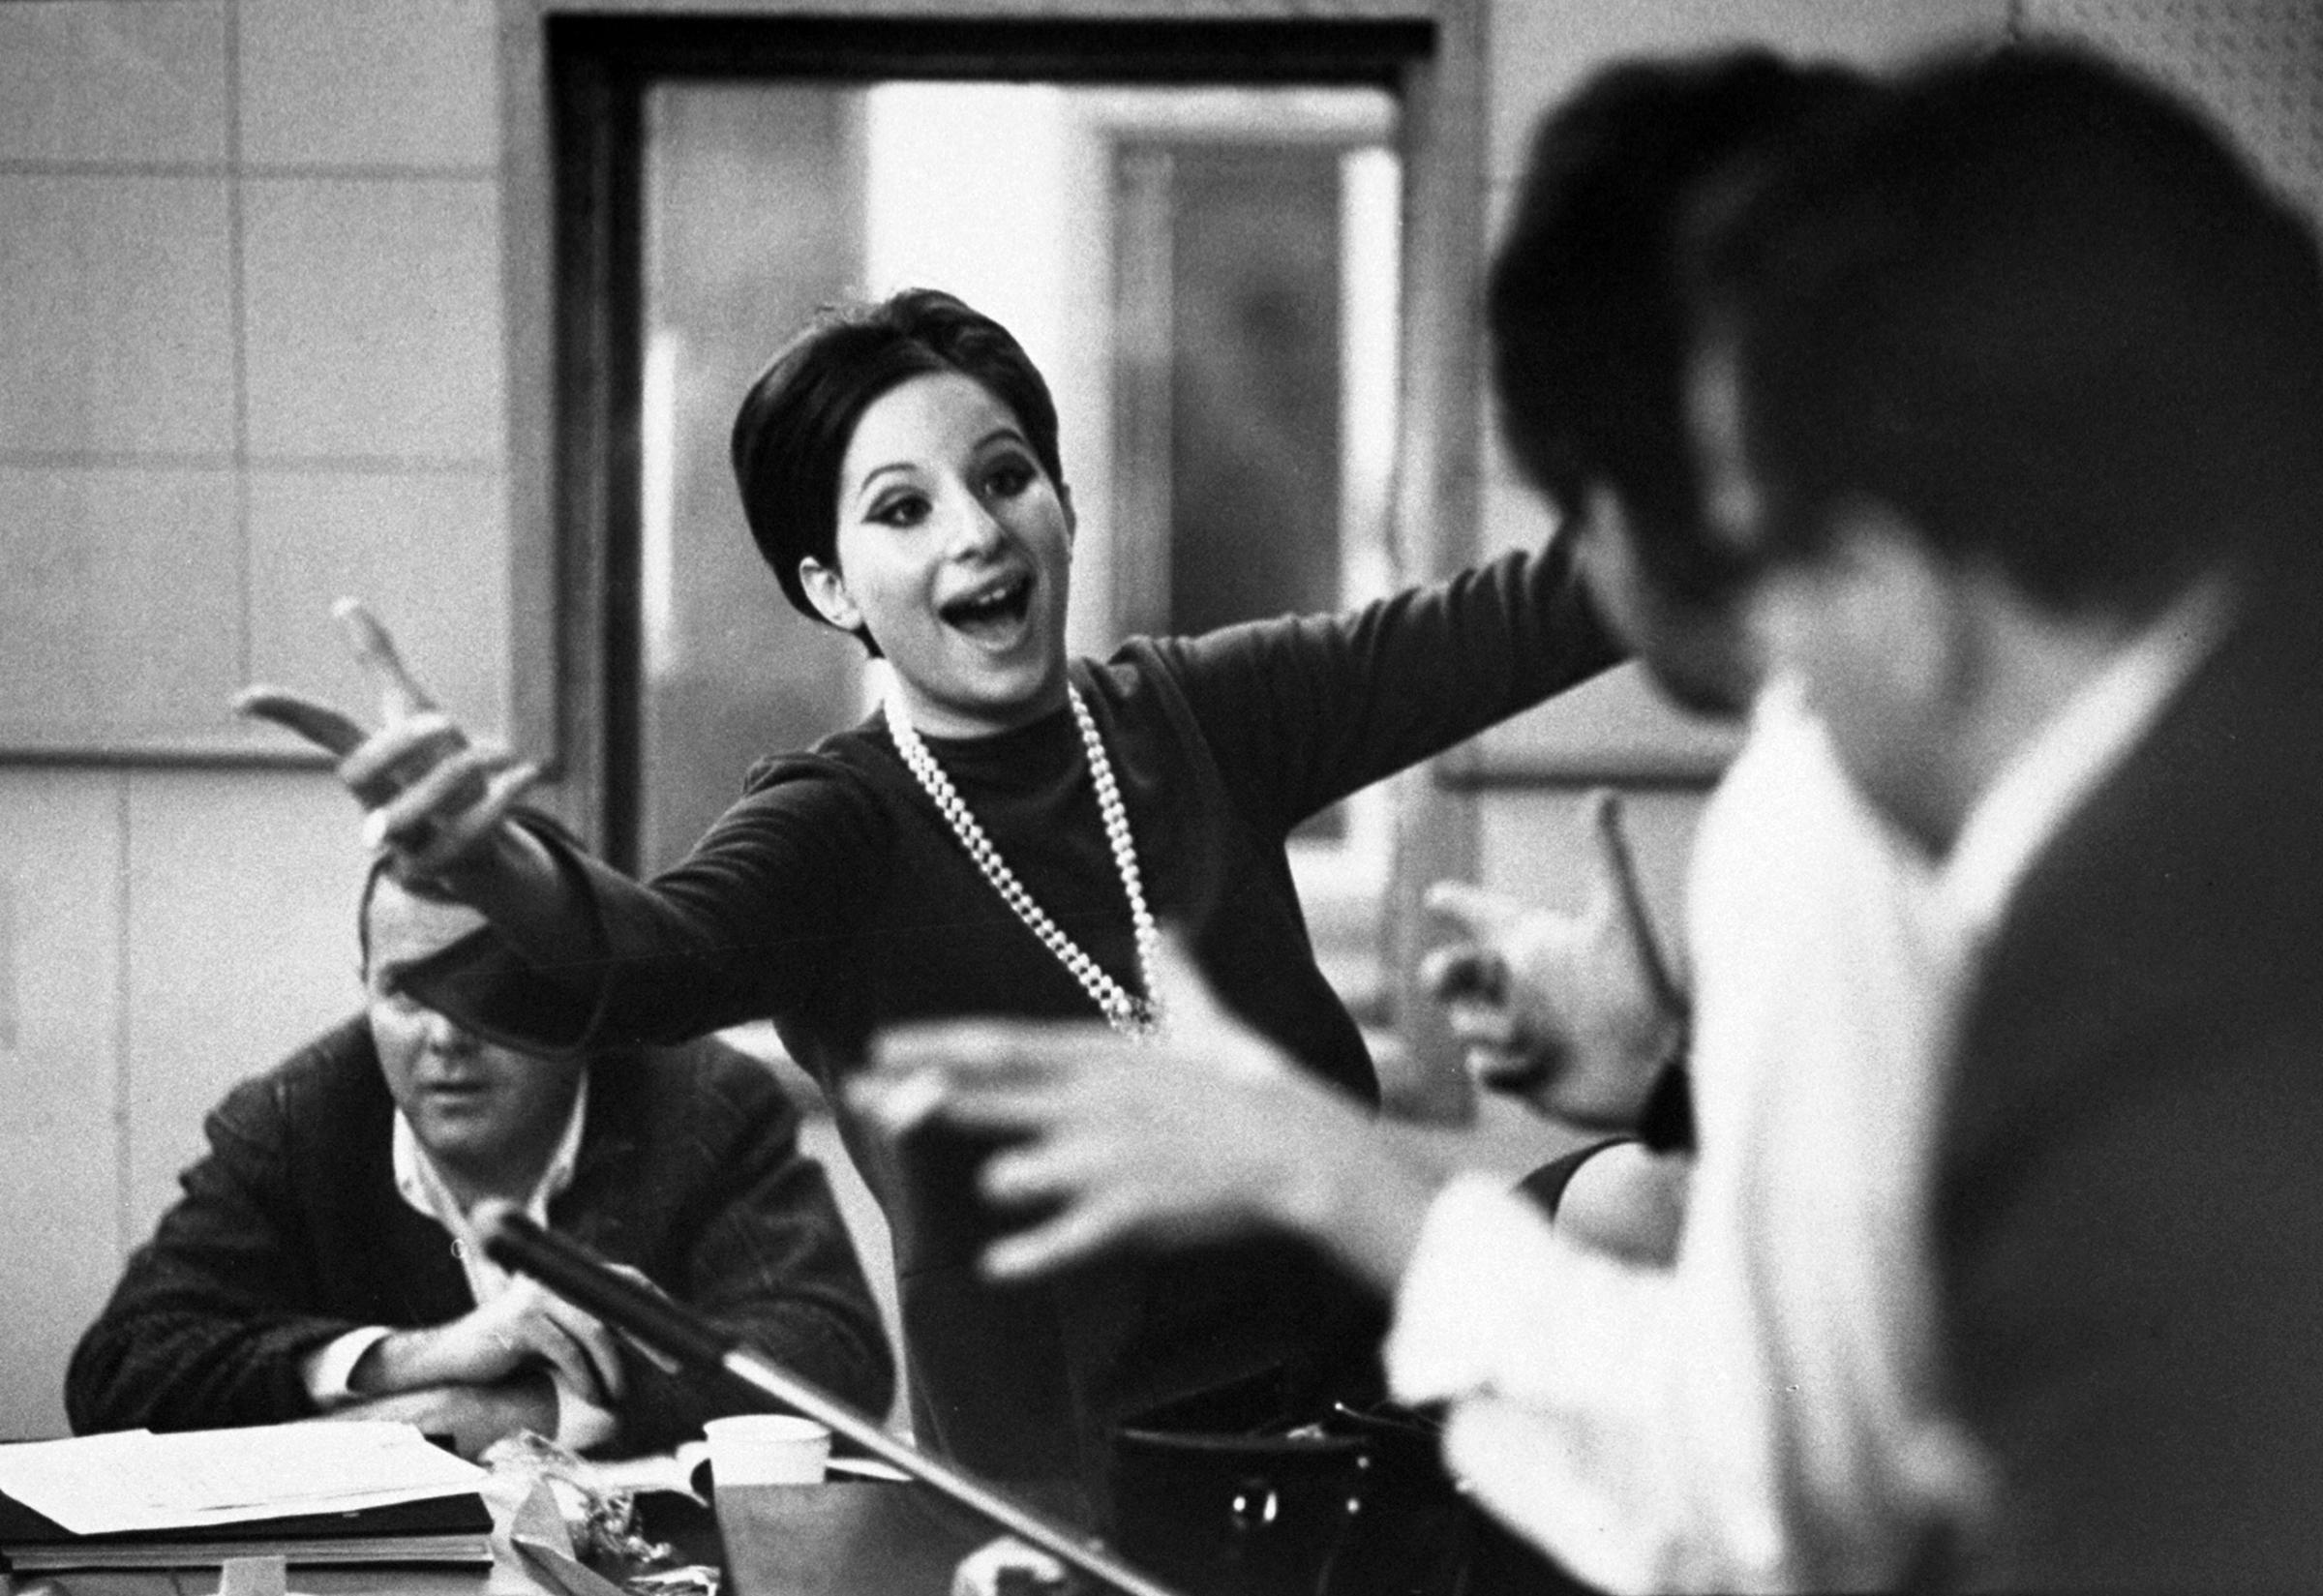 Barbra Streisand in a recording studio in 1966, listening to herself sing.